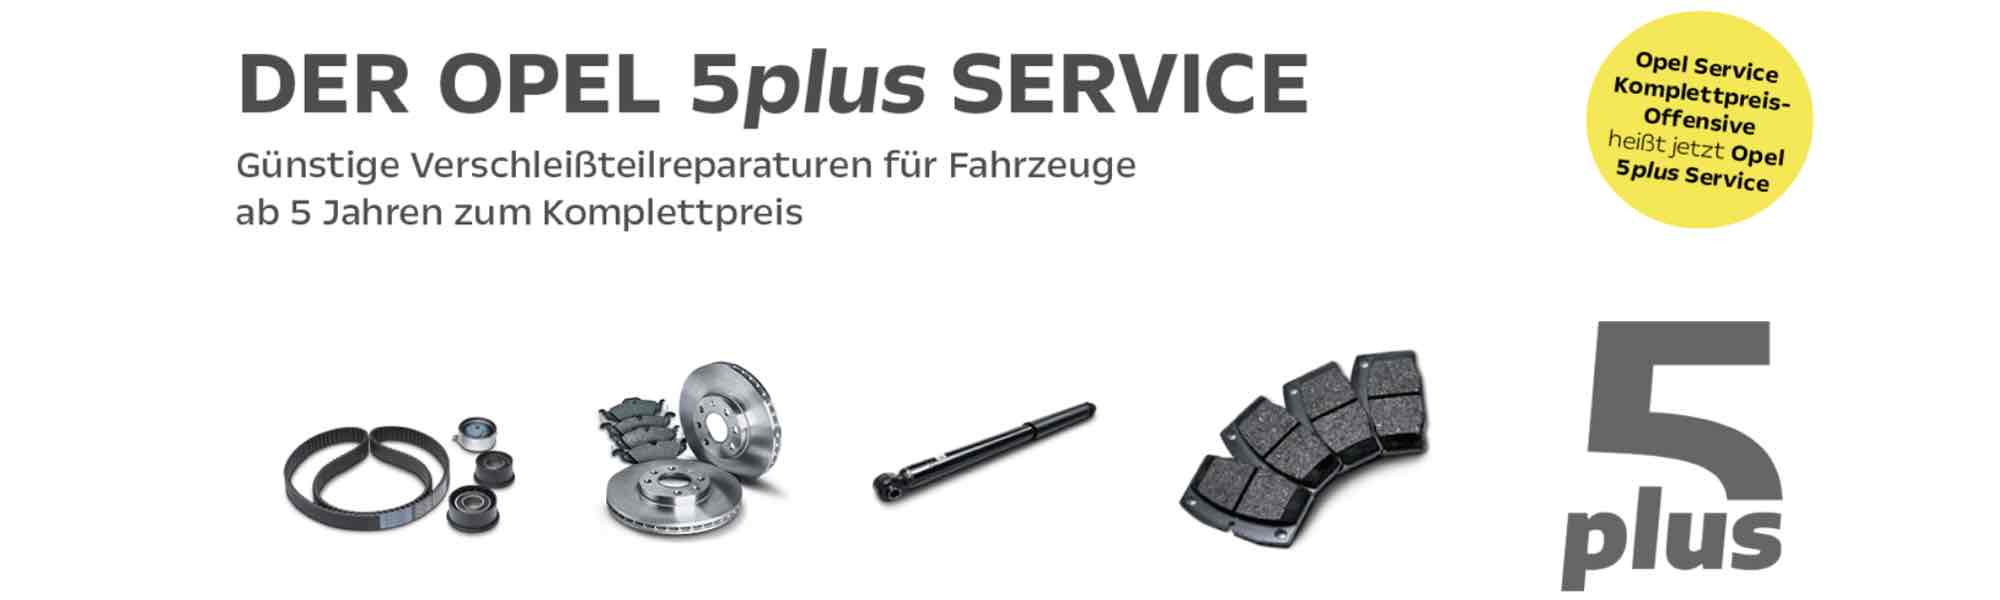 Der Opel 5plus Service